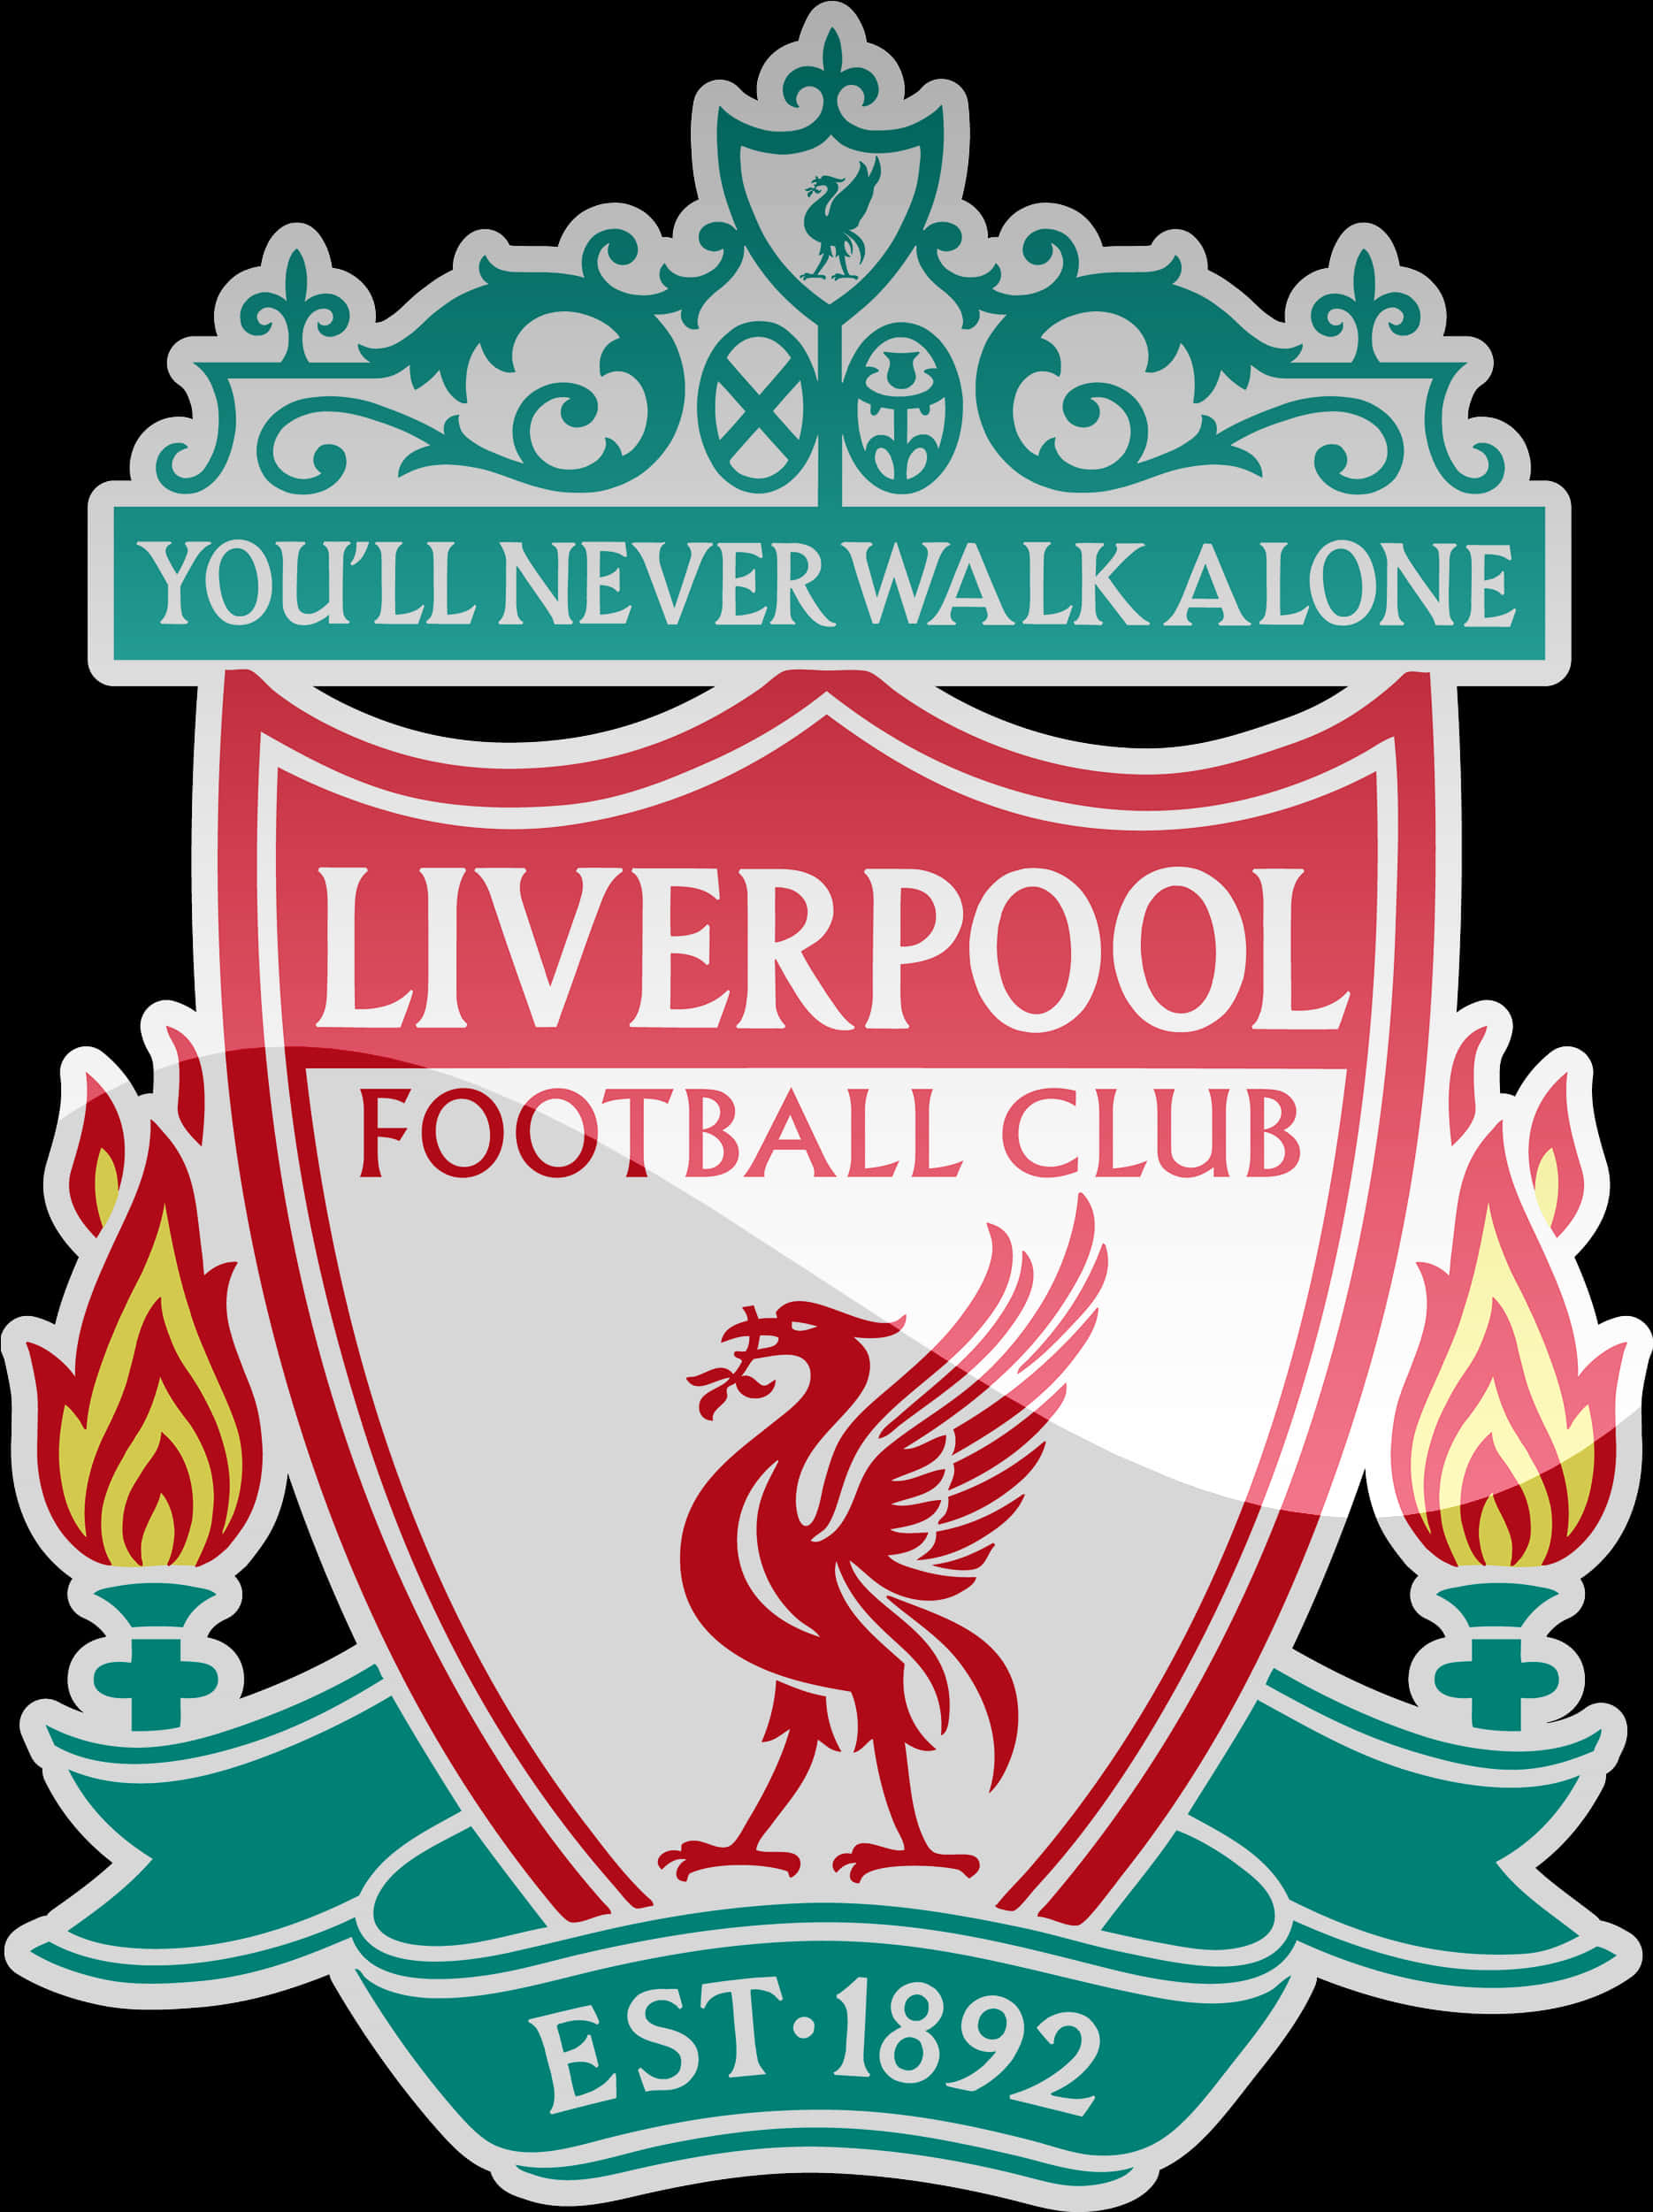 A Logo Of A Football Club